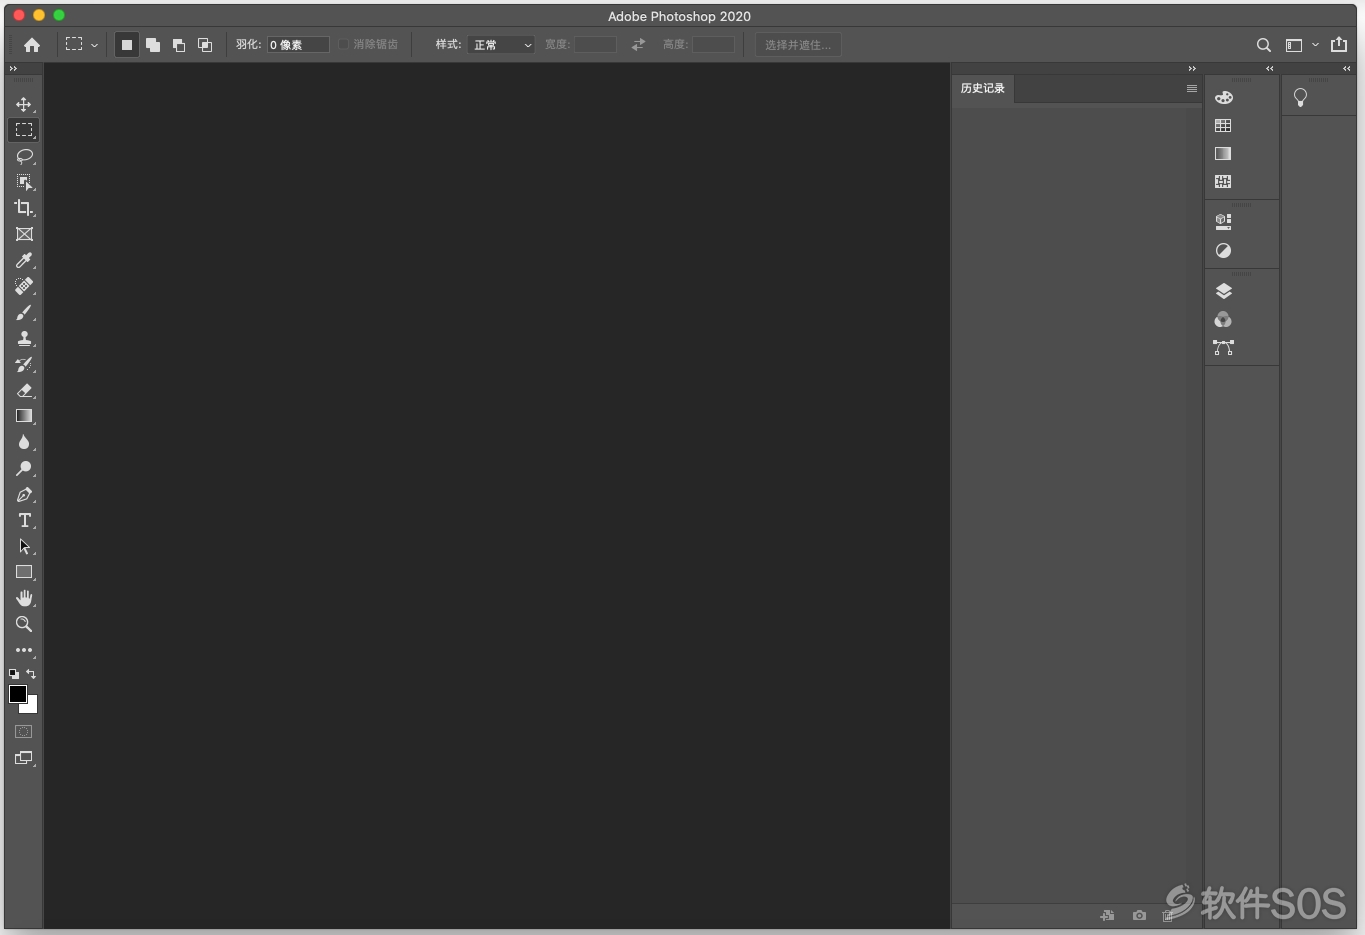 Photoshop 2020 for Mac v21.2.0 PS图片处理 安装激活详解